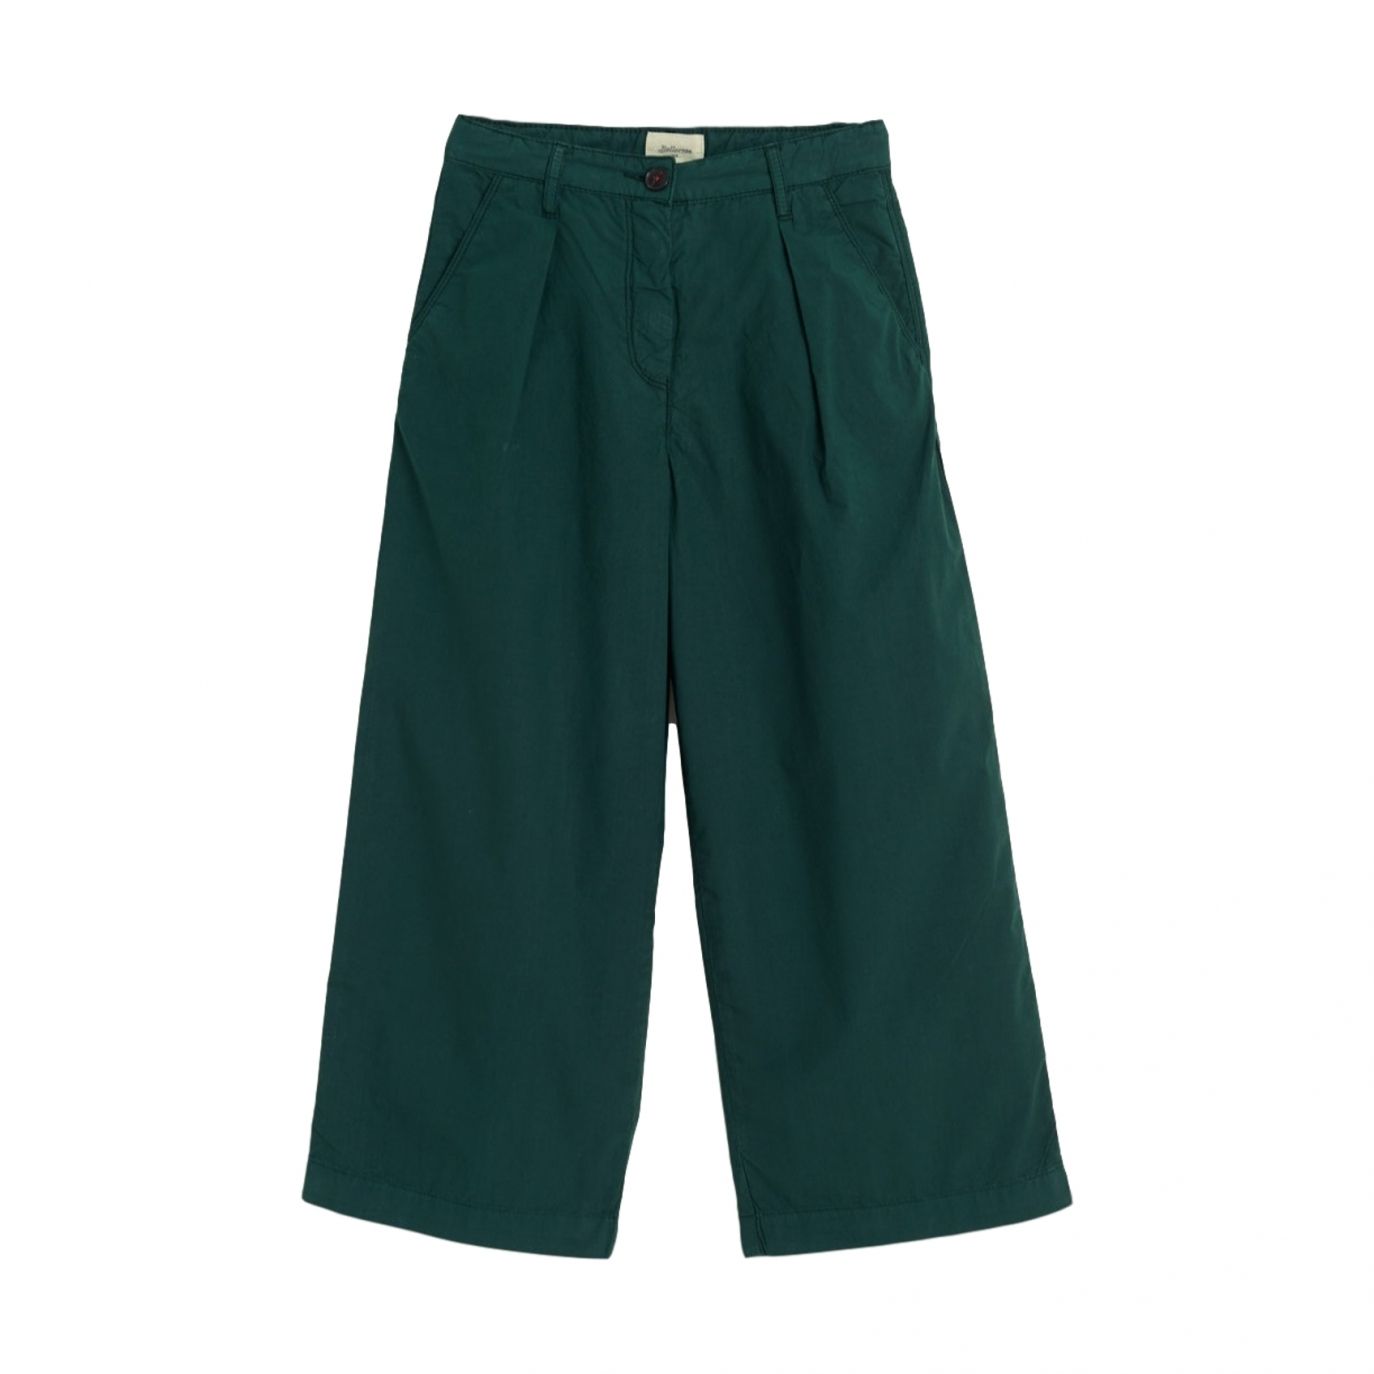 Bellerose - Papa201 Pants Green - Pantalones y leggings - BK201101 R0740 